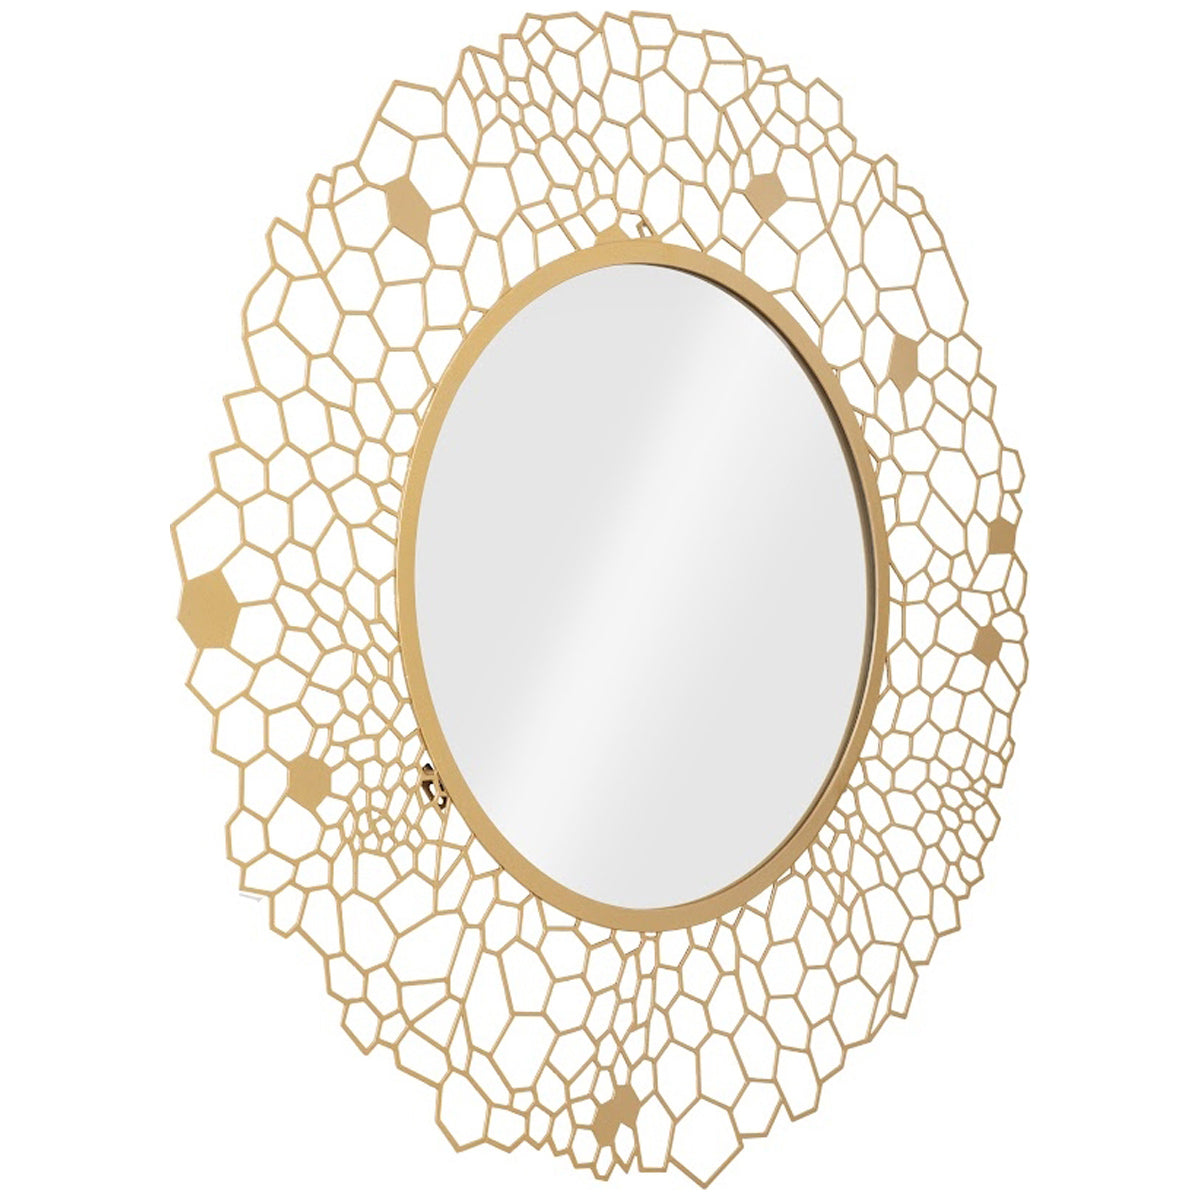 Phillips Collection Honeycomb Round Brass Mirror